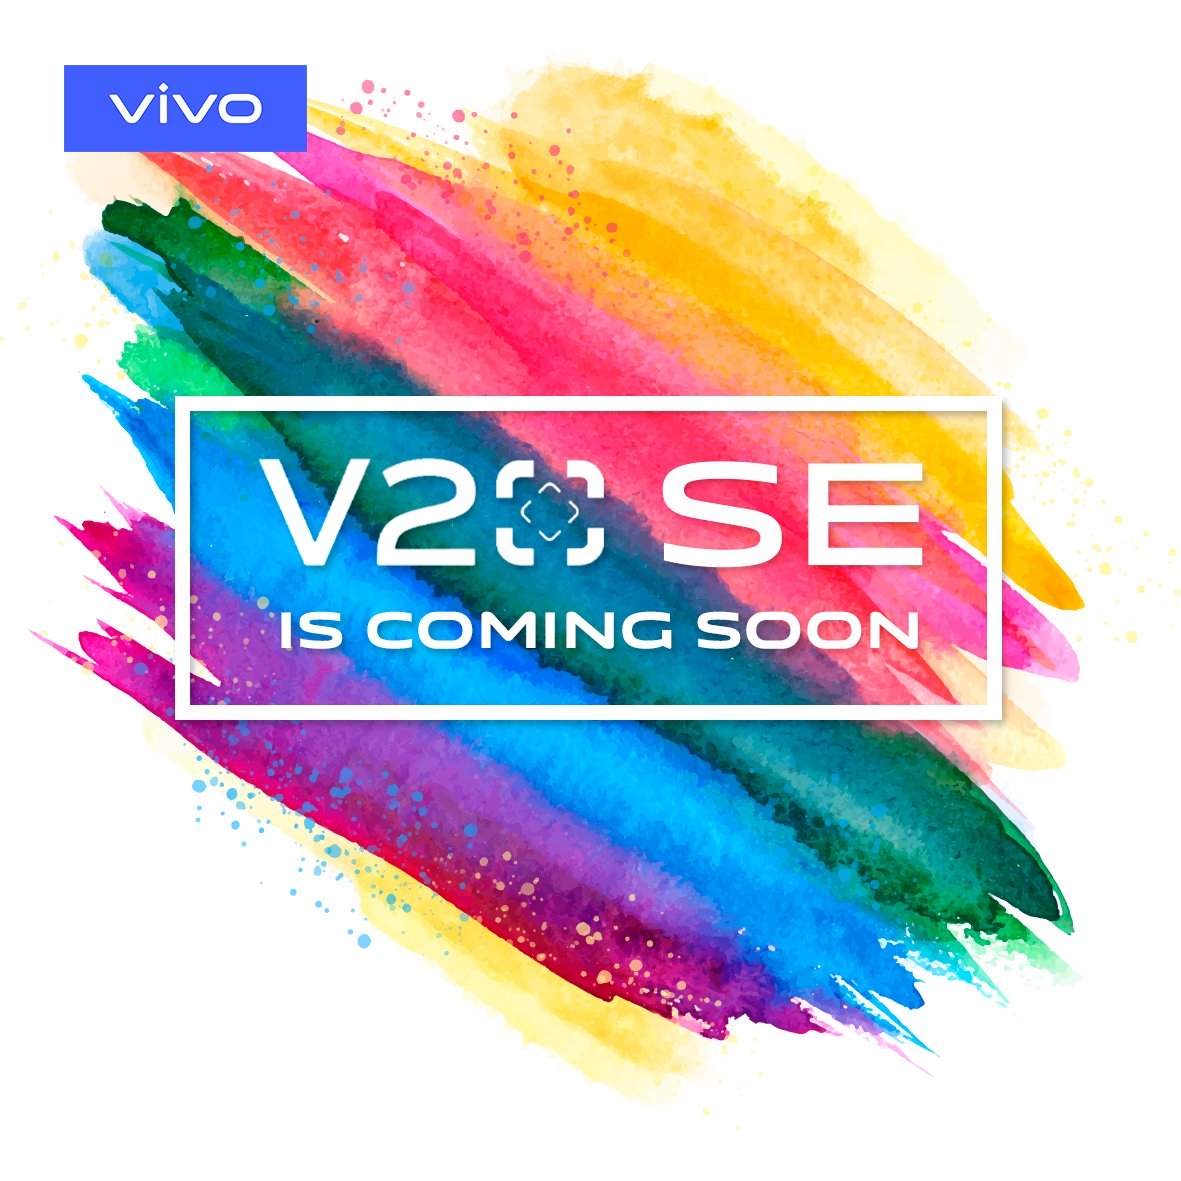 Vivo V20 SE’s arrival officially confirmed